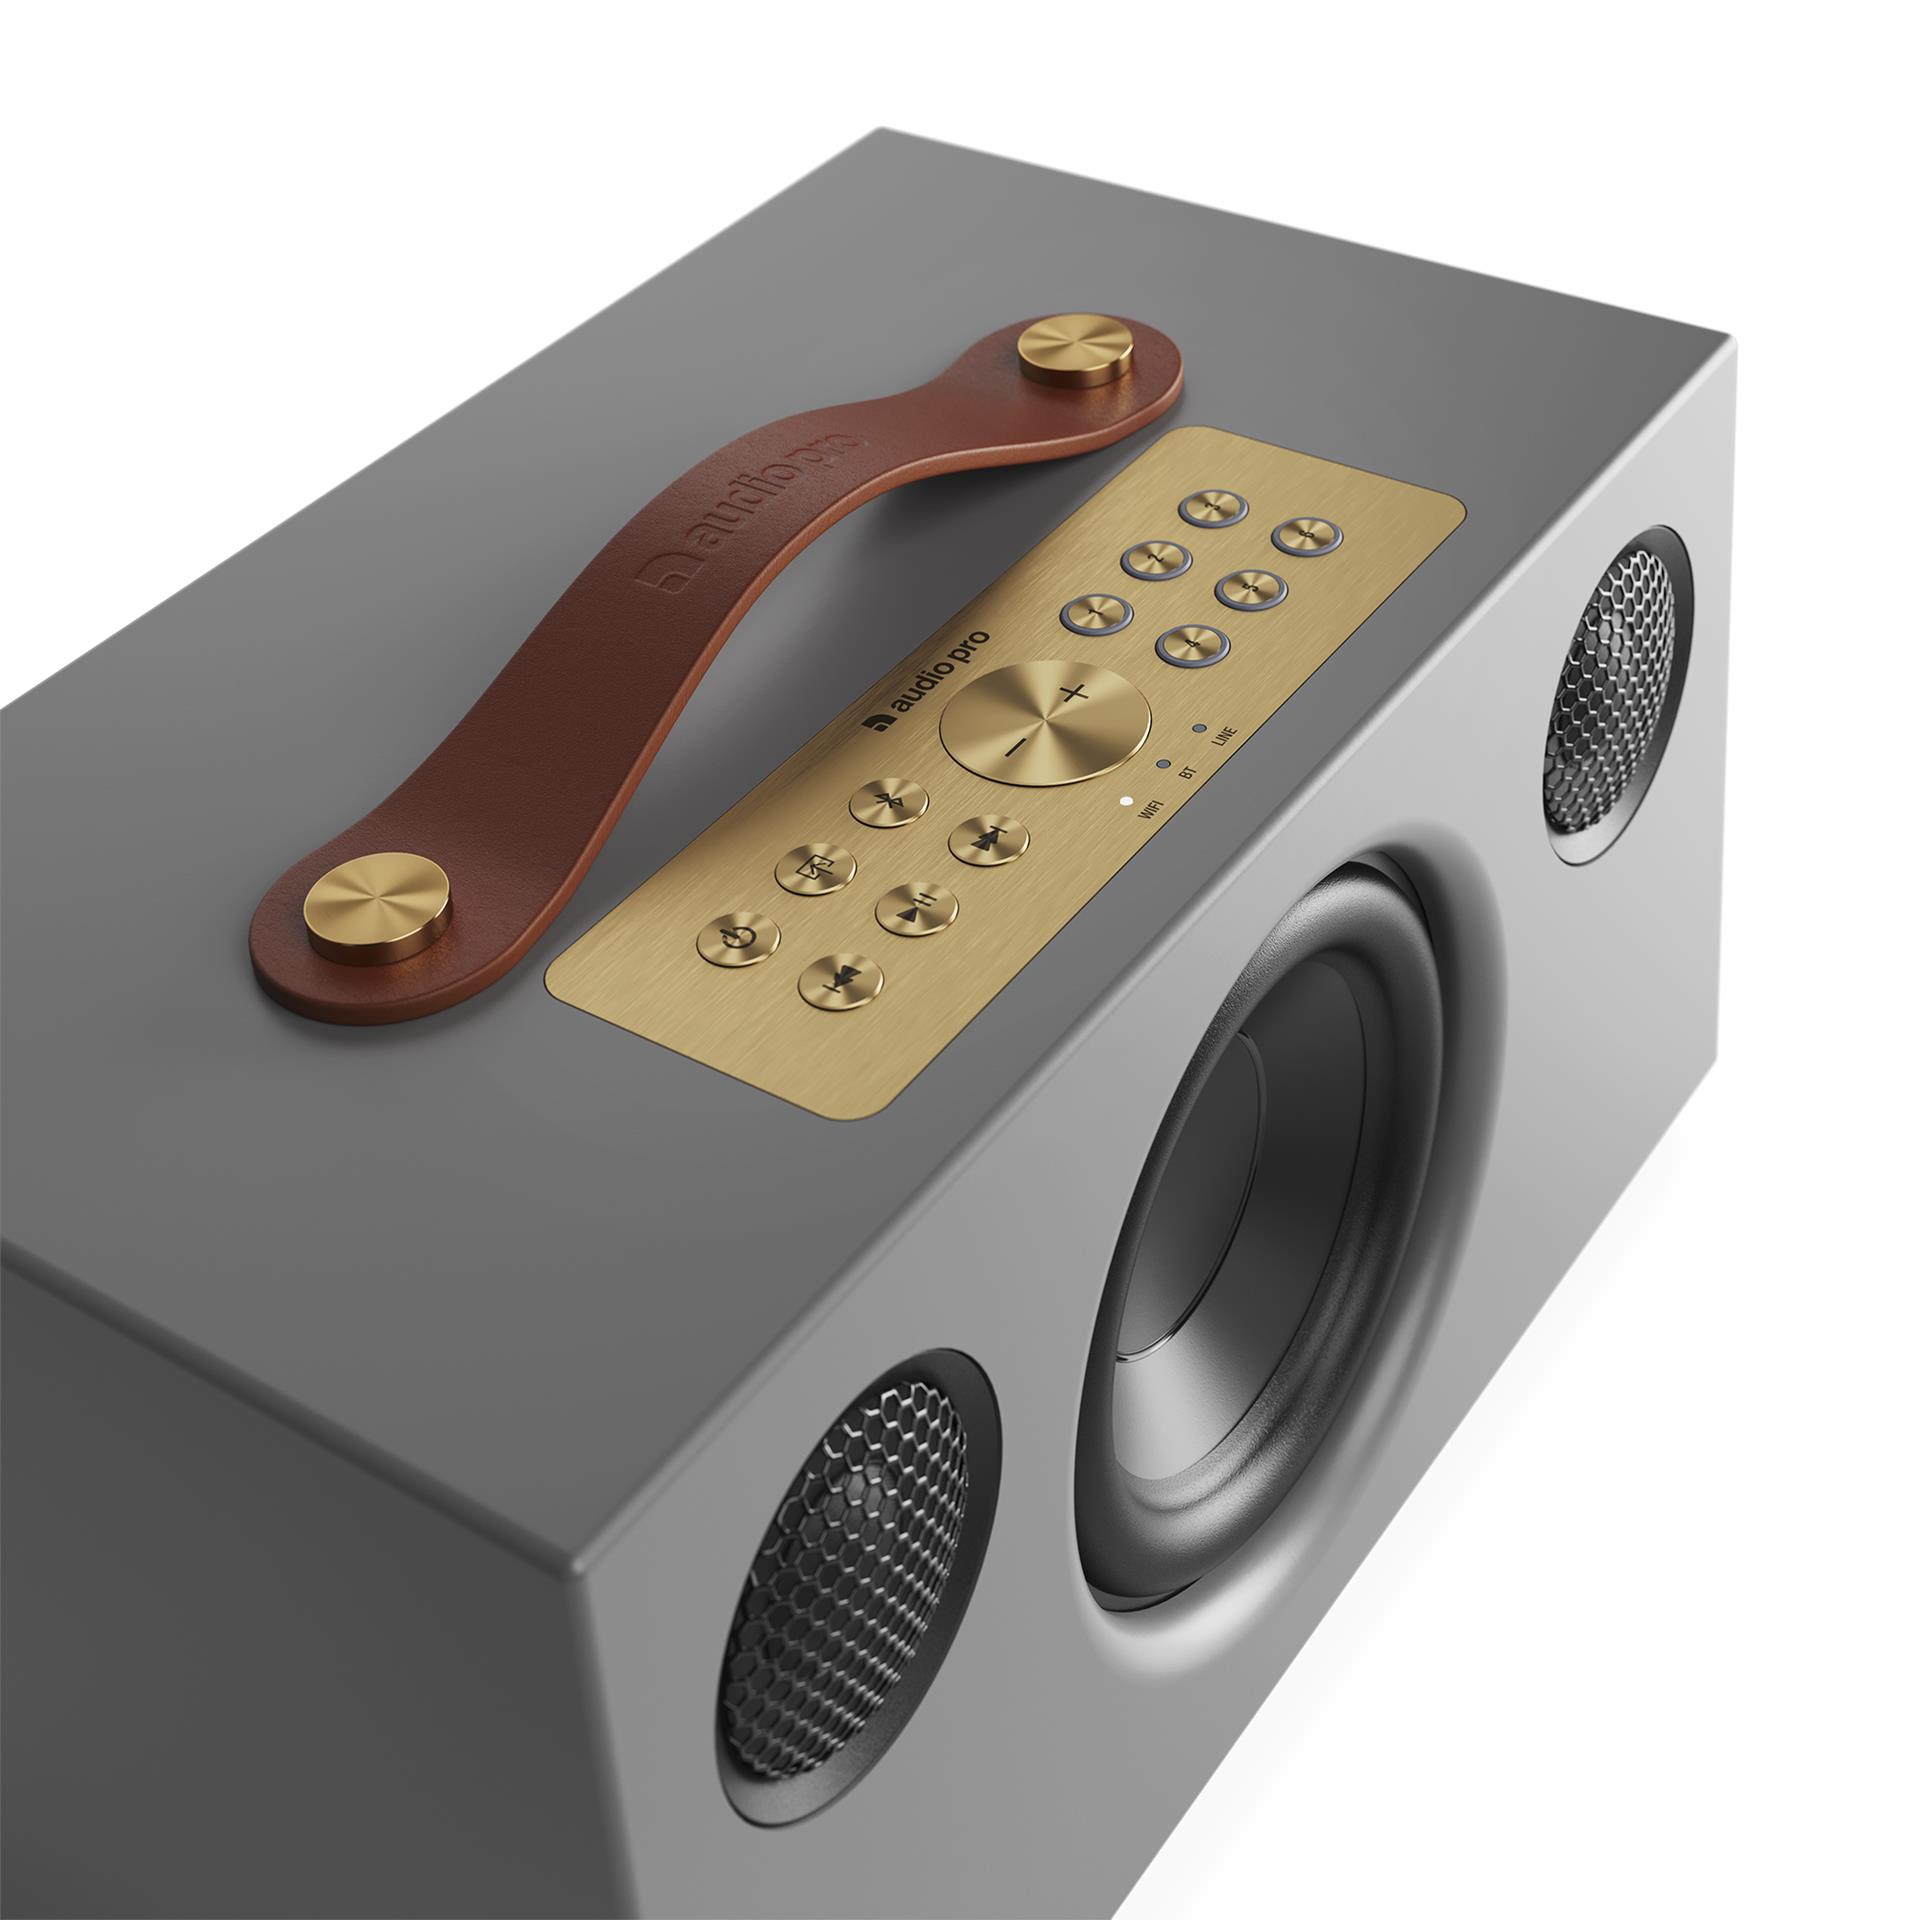 Audio Pro C5MkII juhtmevaba mitmetoaline kõlar, hall